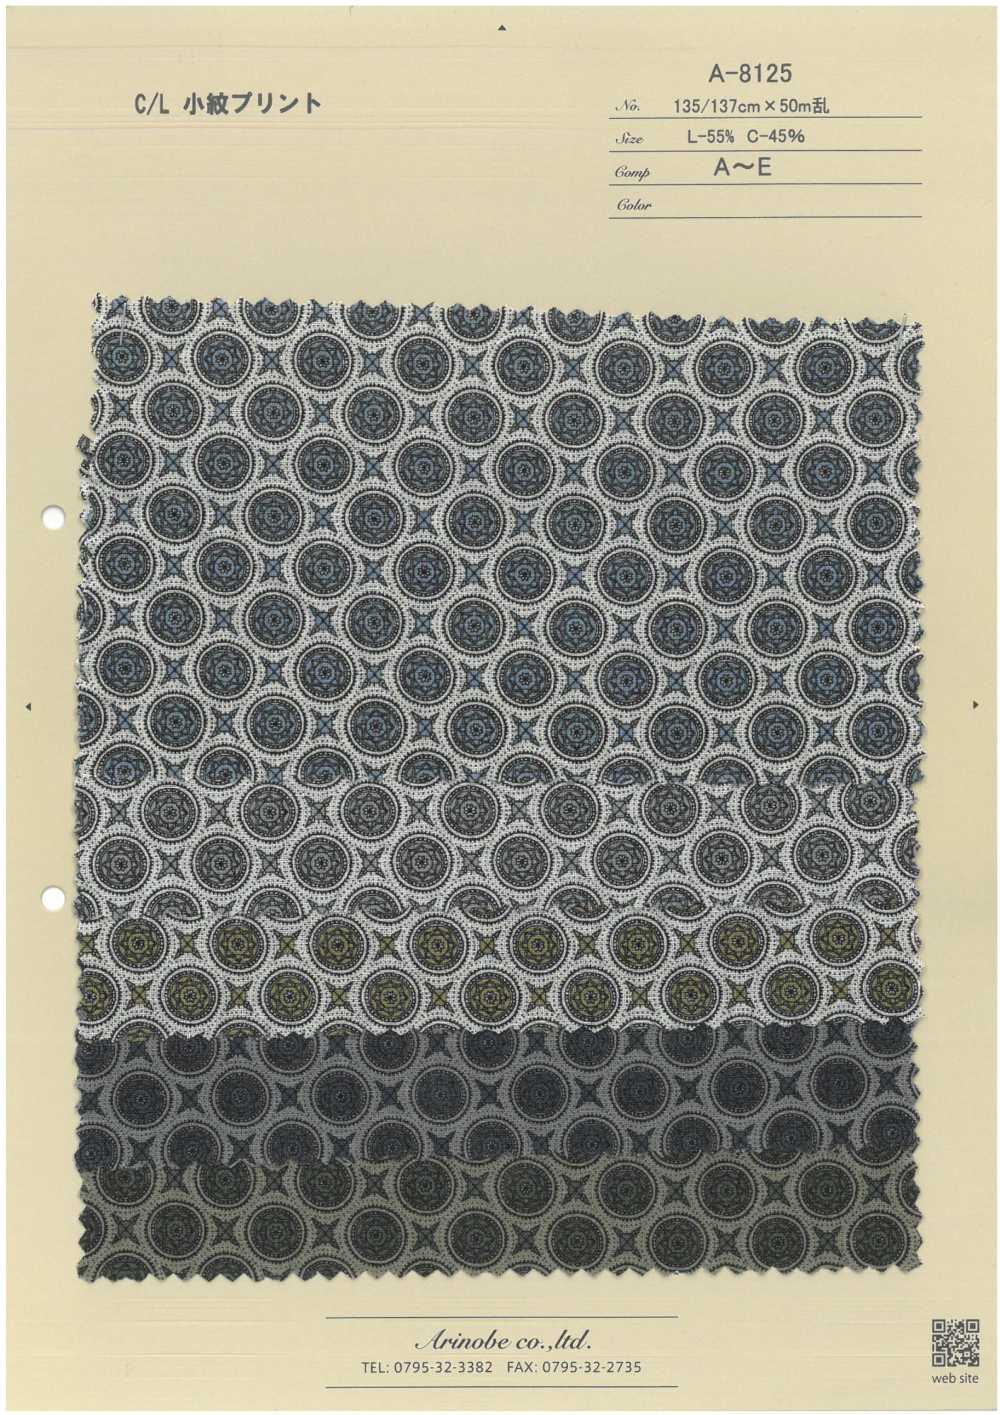 A-8125 C/L Kleingedrucktes[Textilgewebe] ARINOBE CO., LTD.